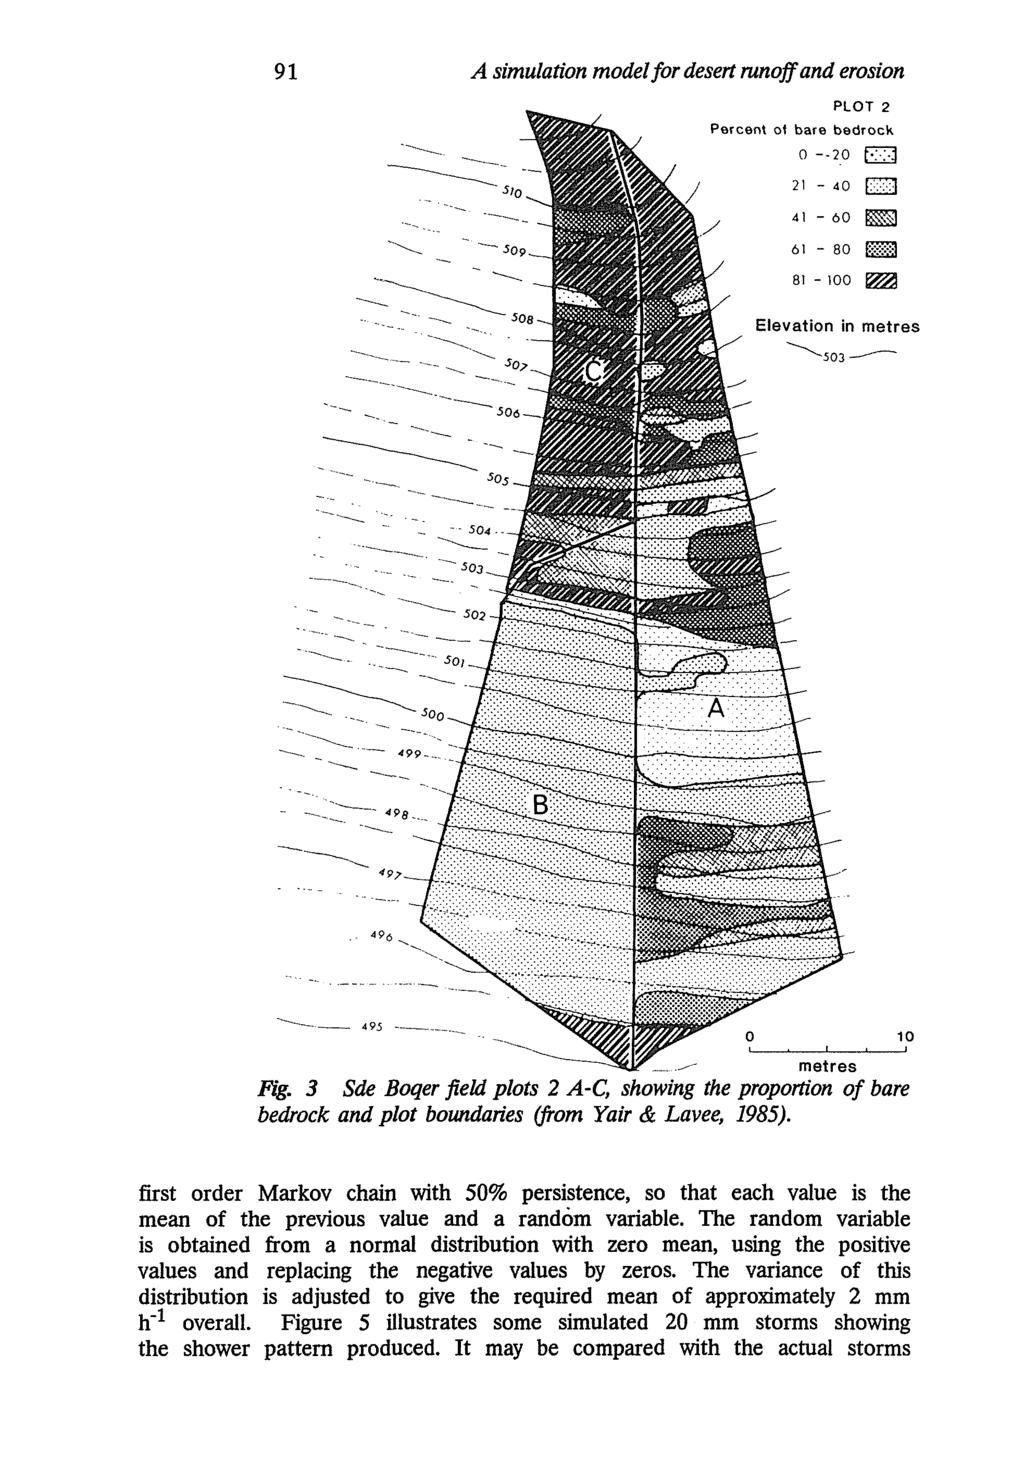 91 A simulation model for desert runoff and erosion PLOT 2 Percent of bare bedrock 0-20 3 2i-4o 023 41-60 61-80 ^ 81-100.--- metres Fig.